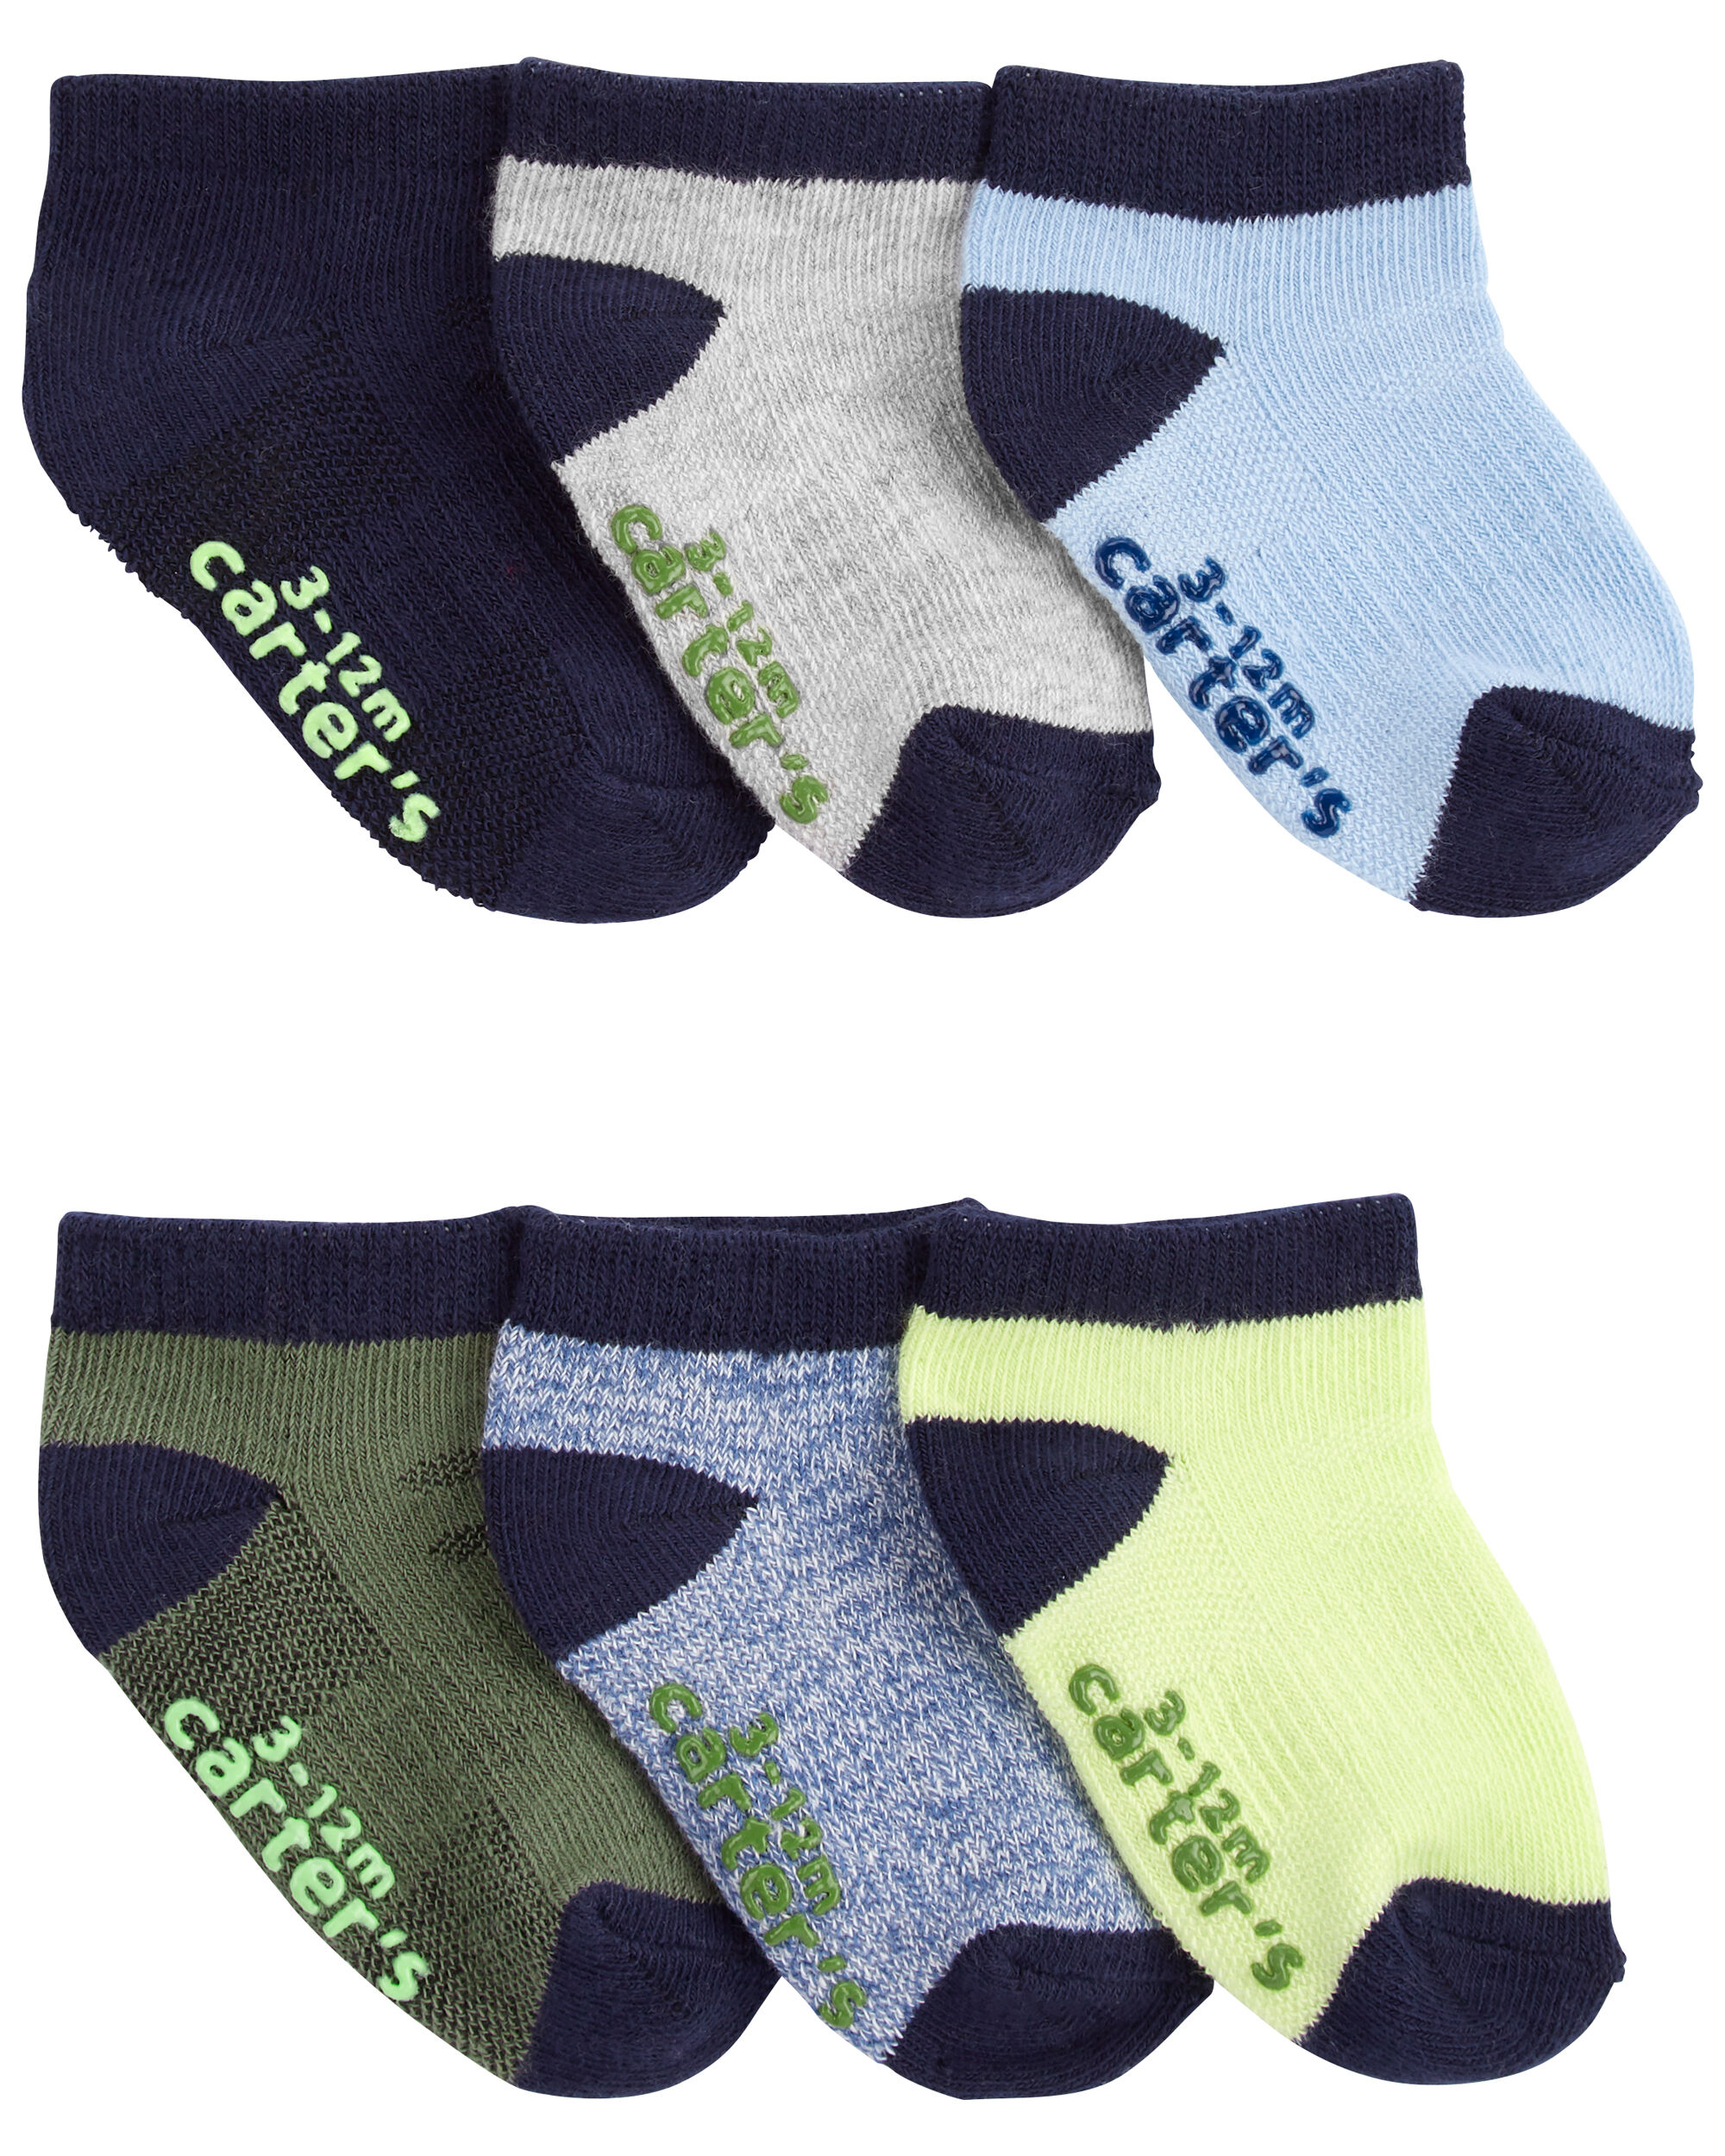 Carters Baby 6-Pack Athletic Socks